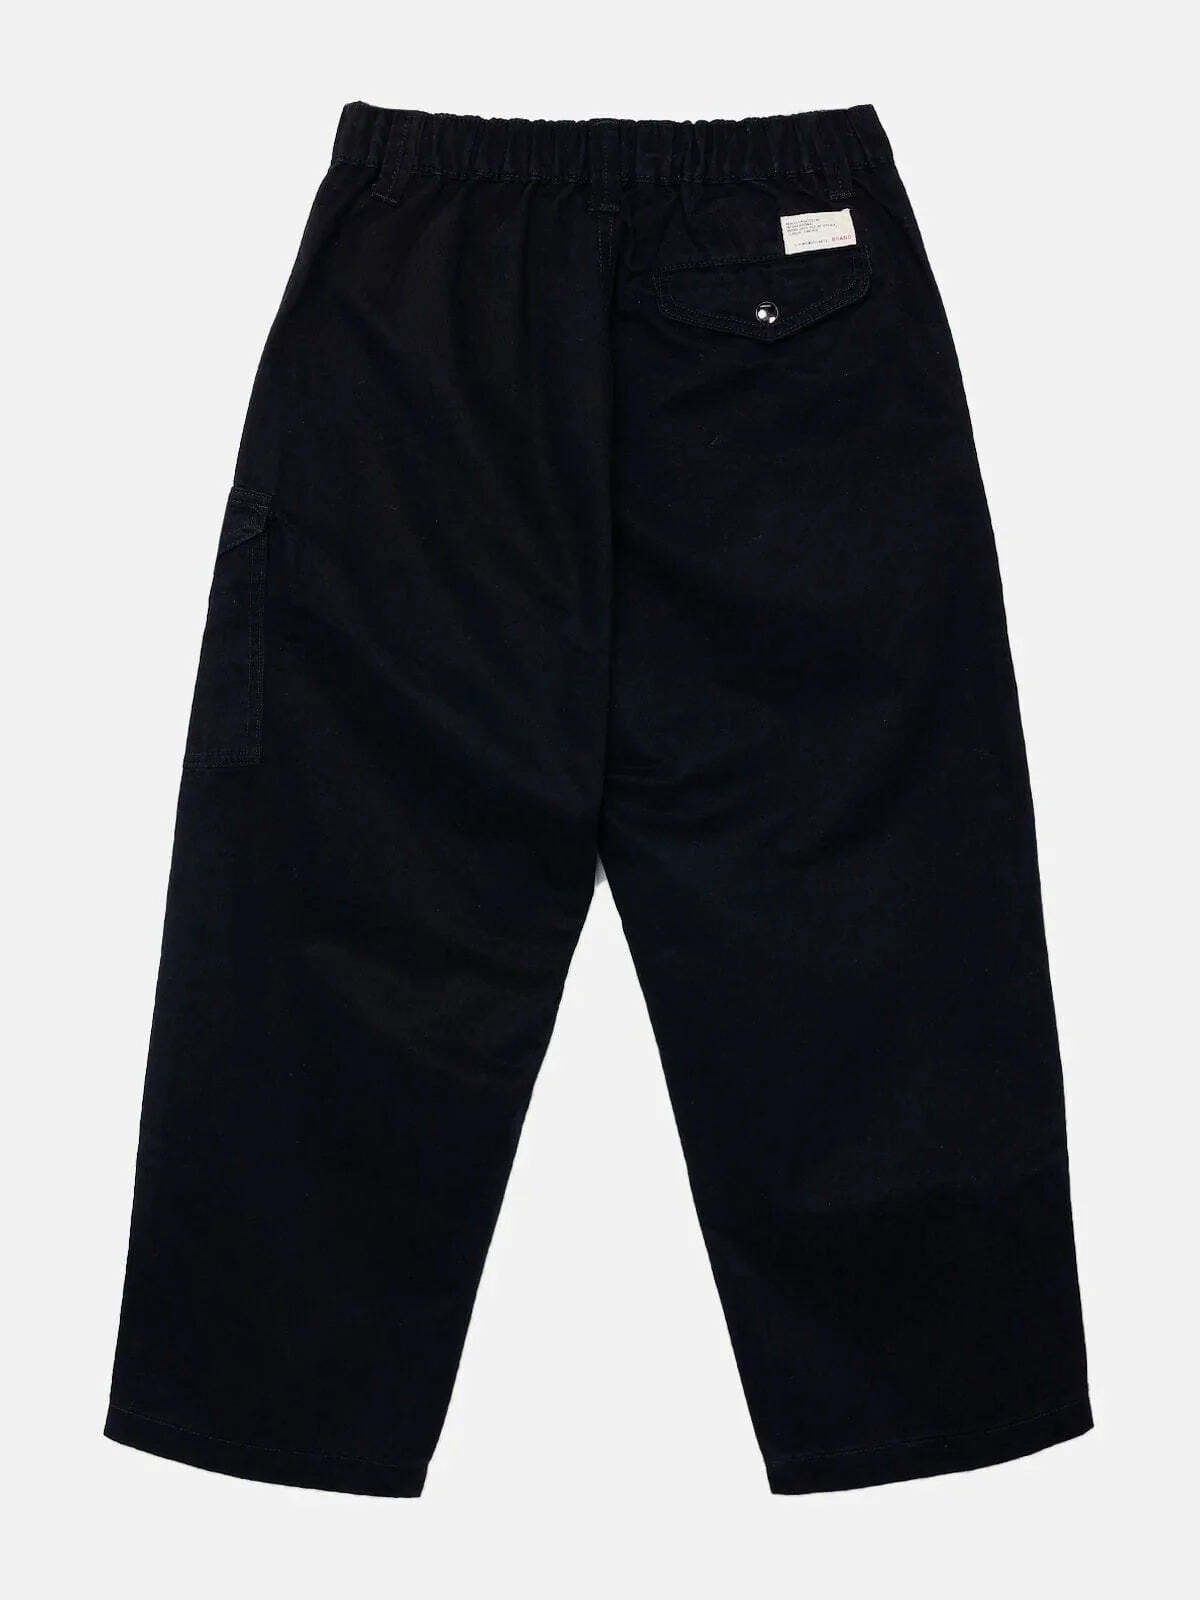 solid button pants sleek & urban streetwear 3004